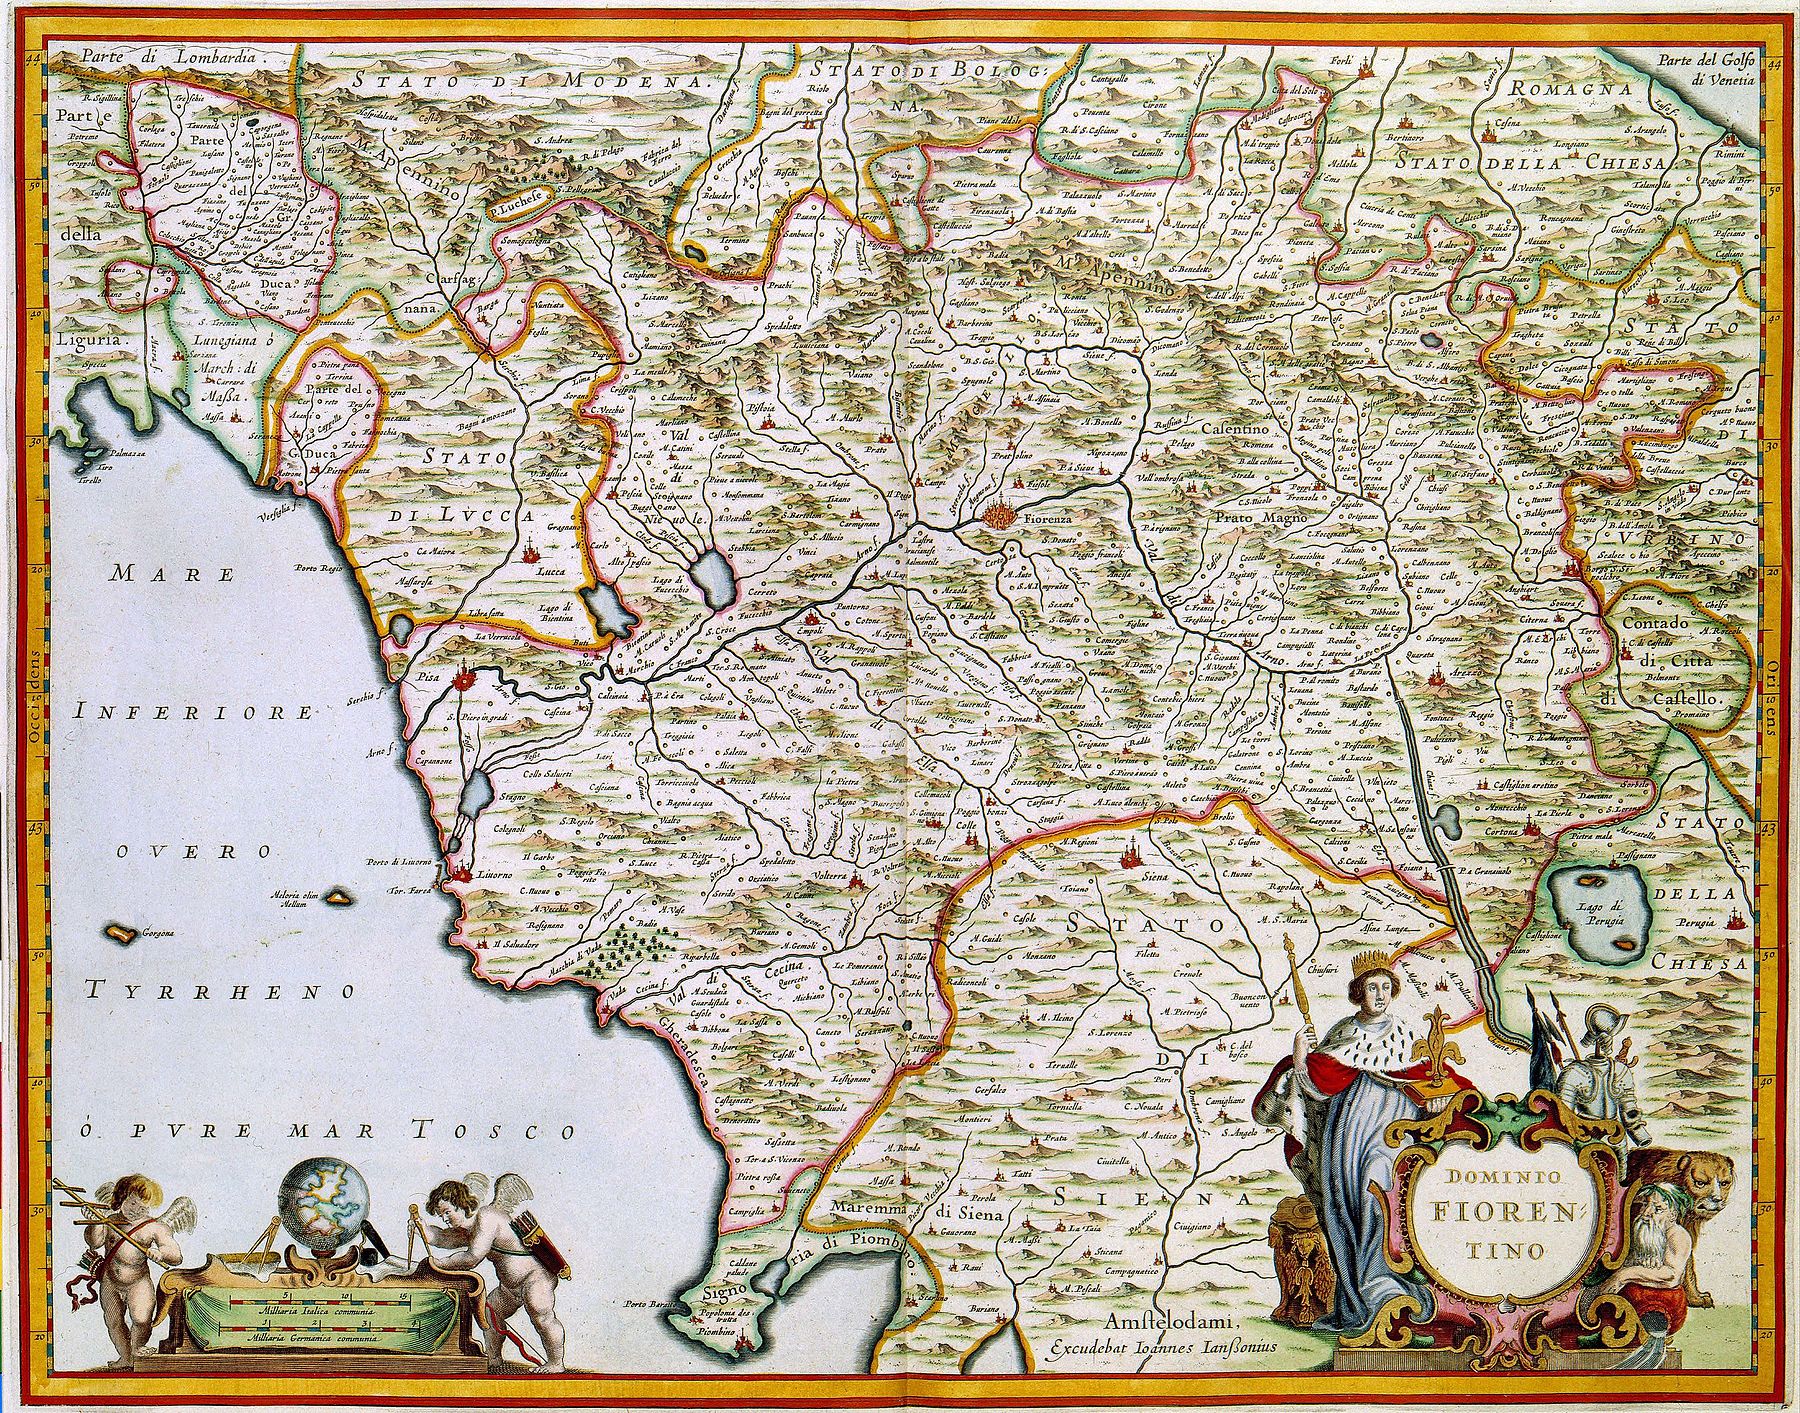 Lunigiana e marchesato di Massa (Jan Janssonius, 1635)